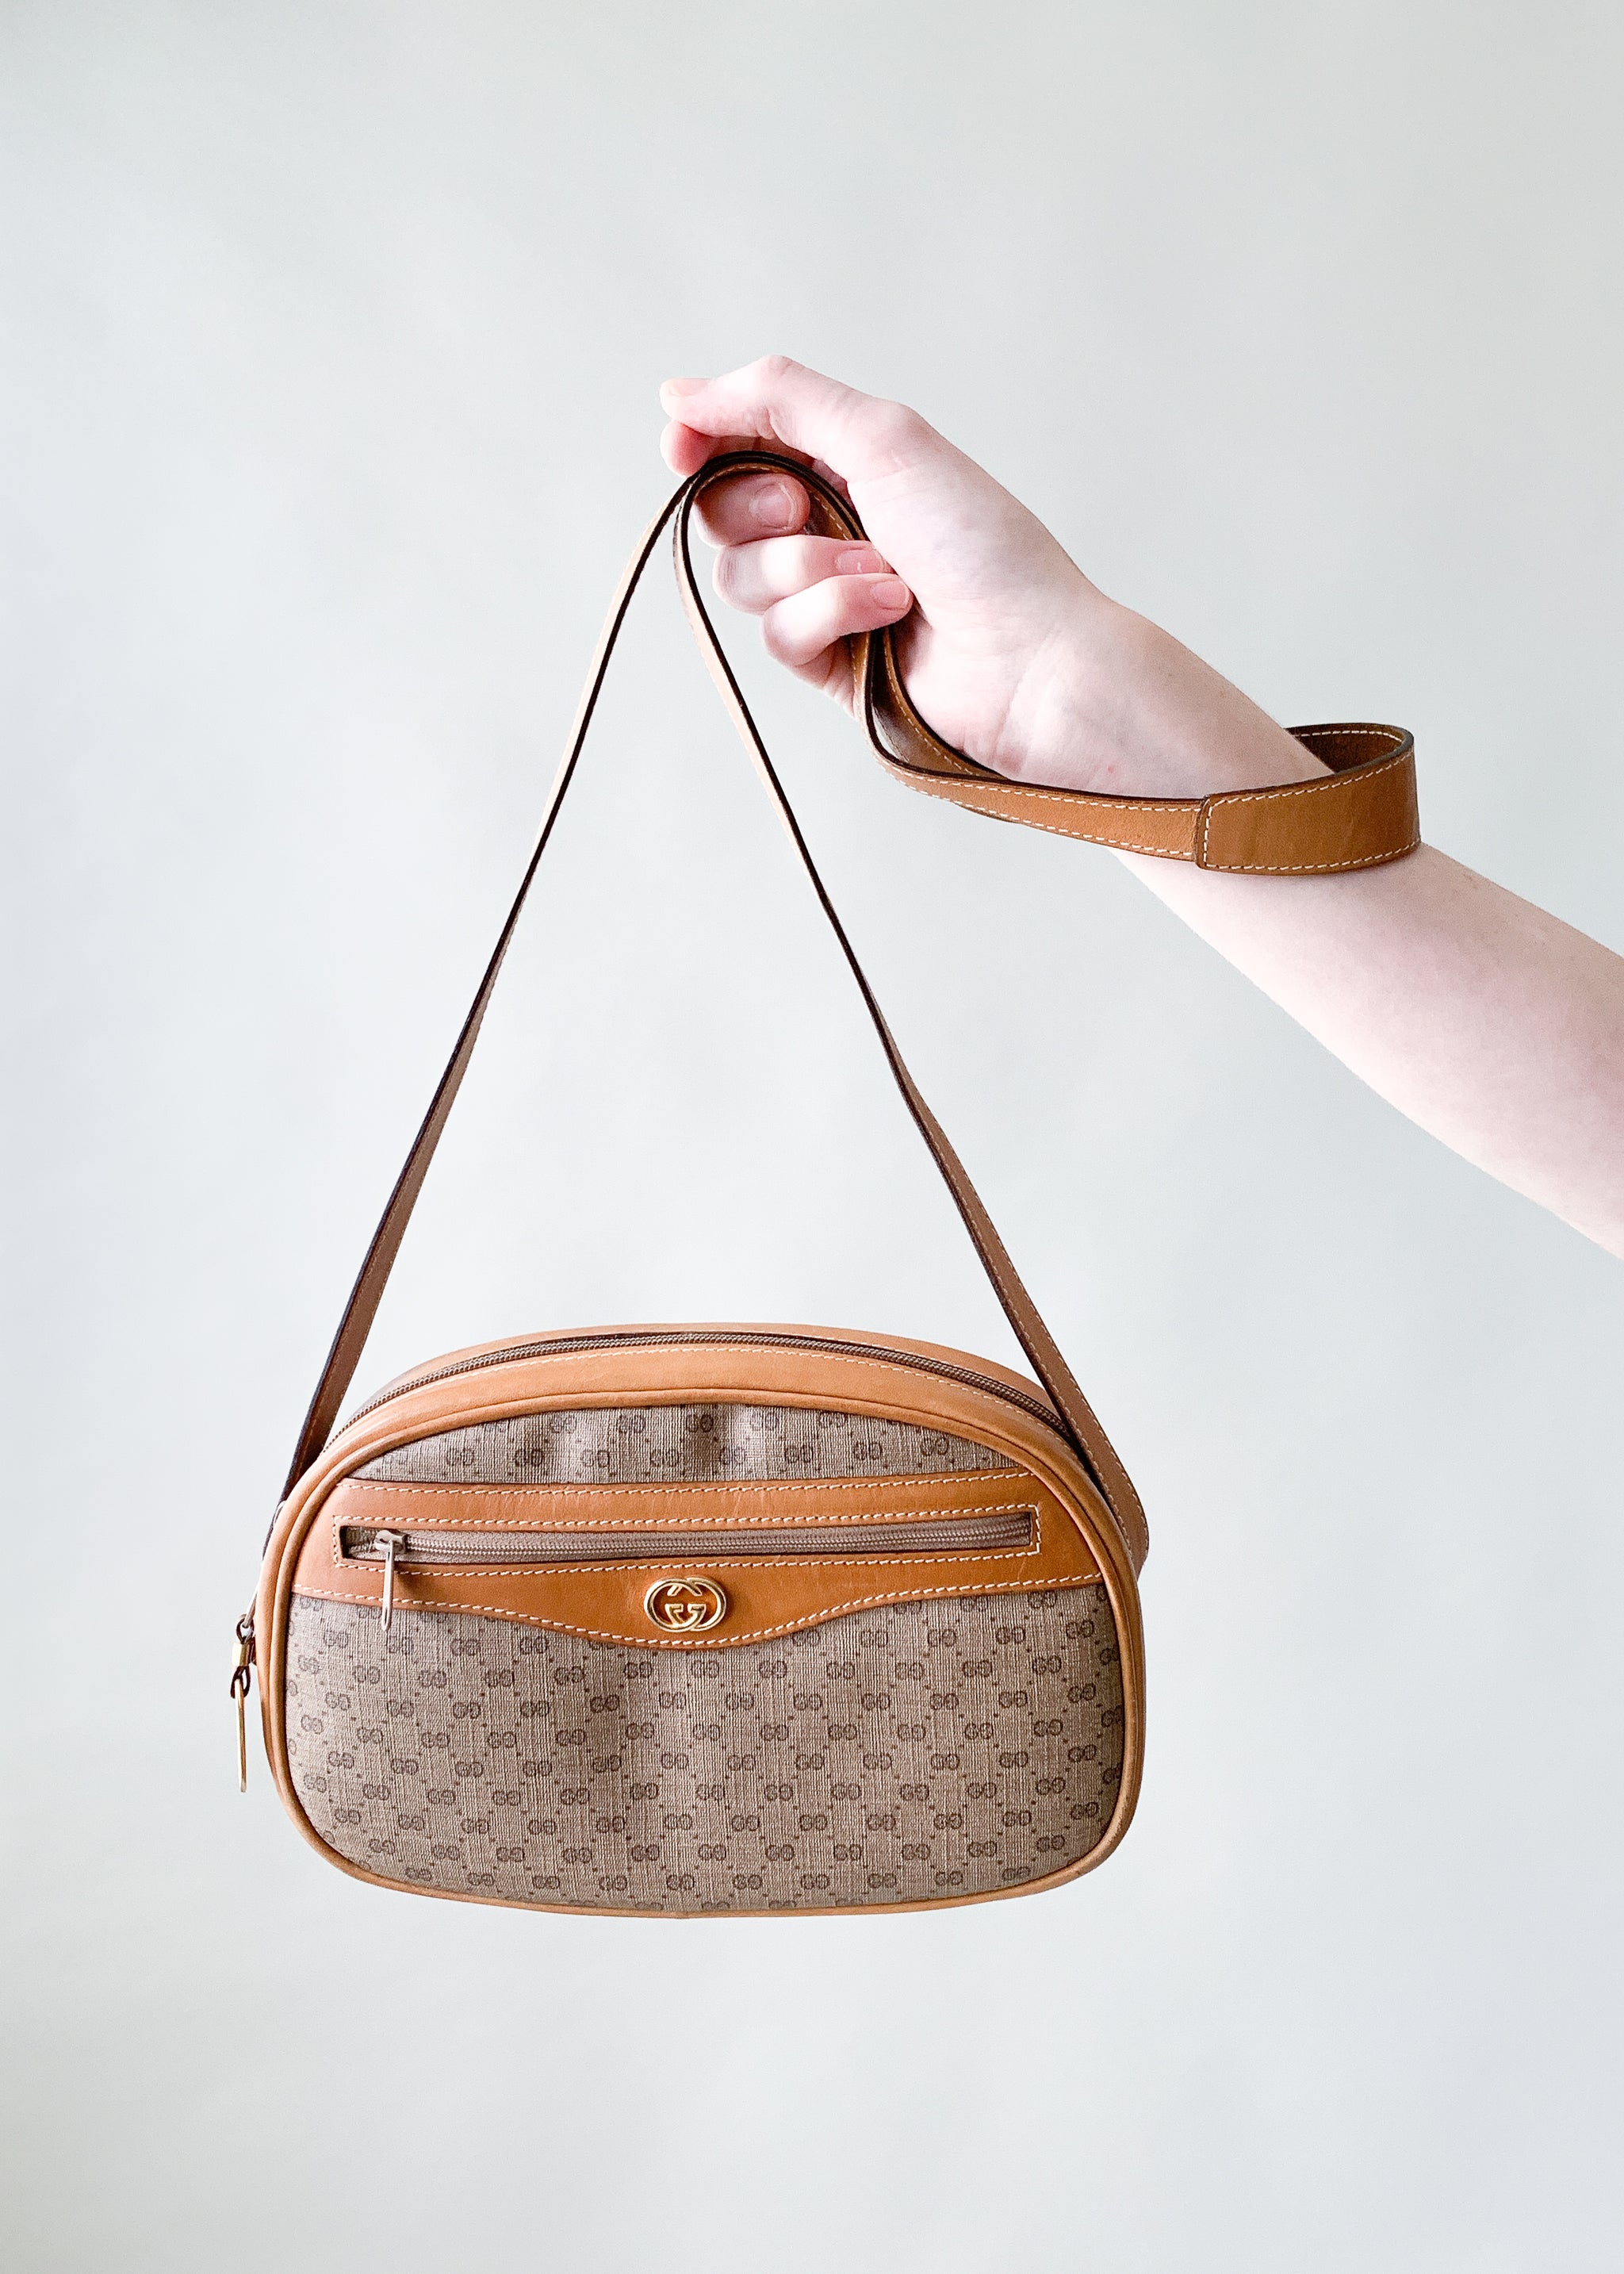 Vintage Gucci Boat Pochette Bag Small Leather Trim Purse Handbag GG Print |  eBay